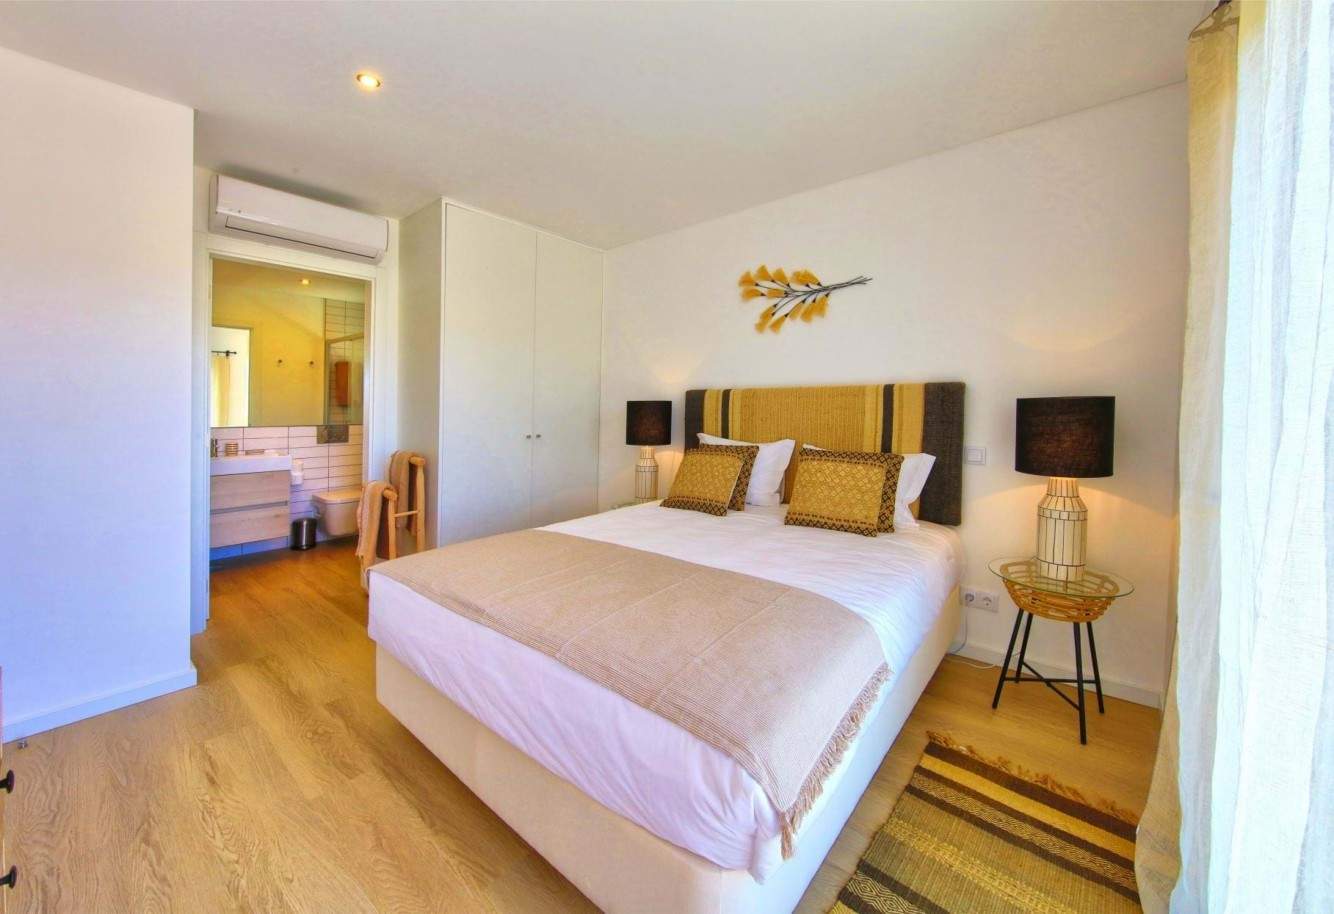 2+1 bedroom villa in resort, for sale in Carvoeiro, Algarve_204825